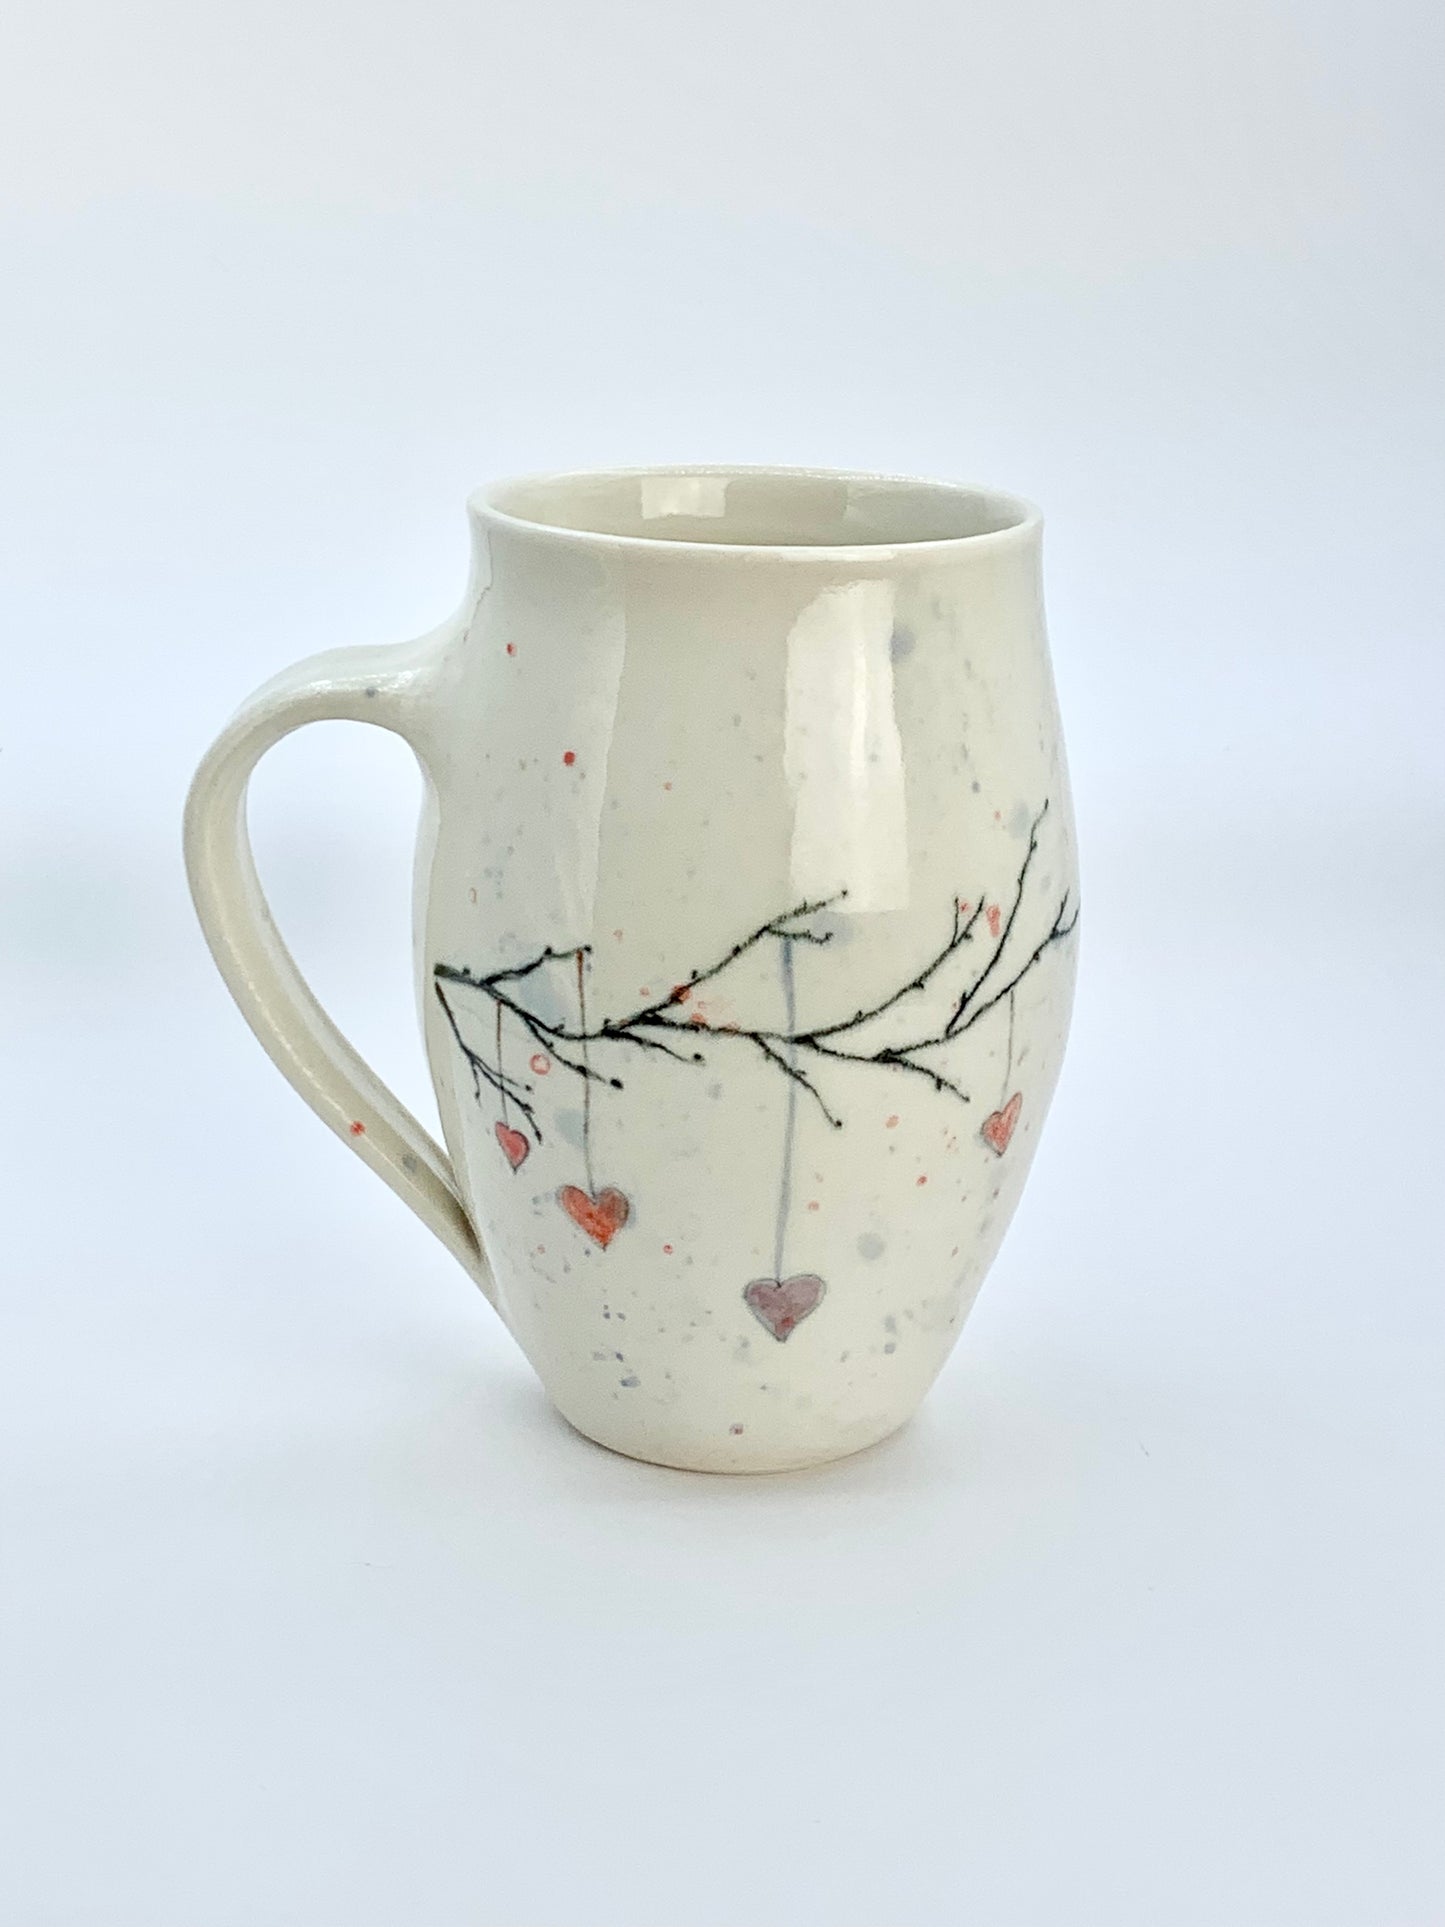 16 oz large porcelain mug with handpainted heart decorations